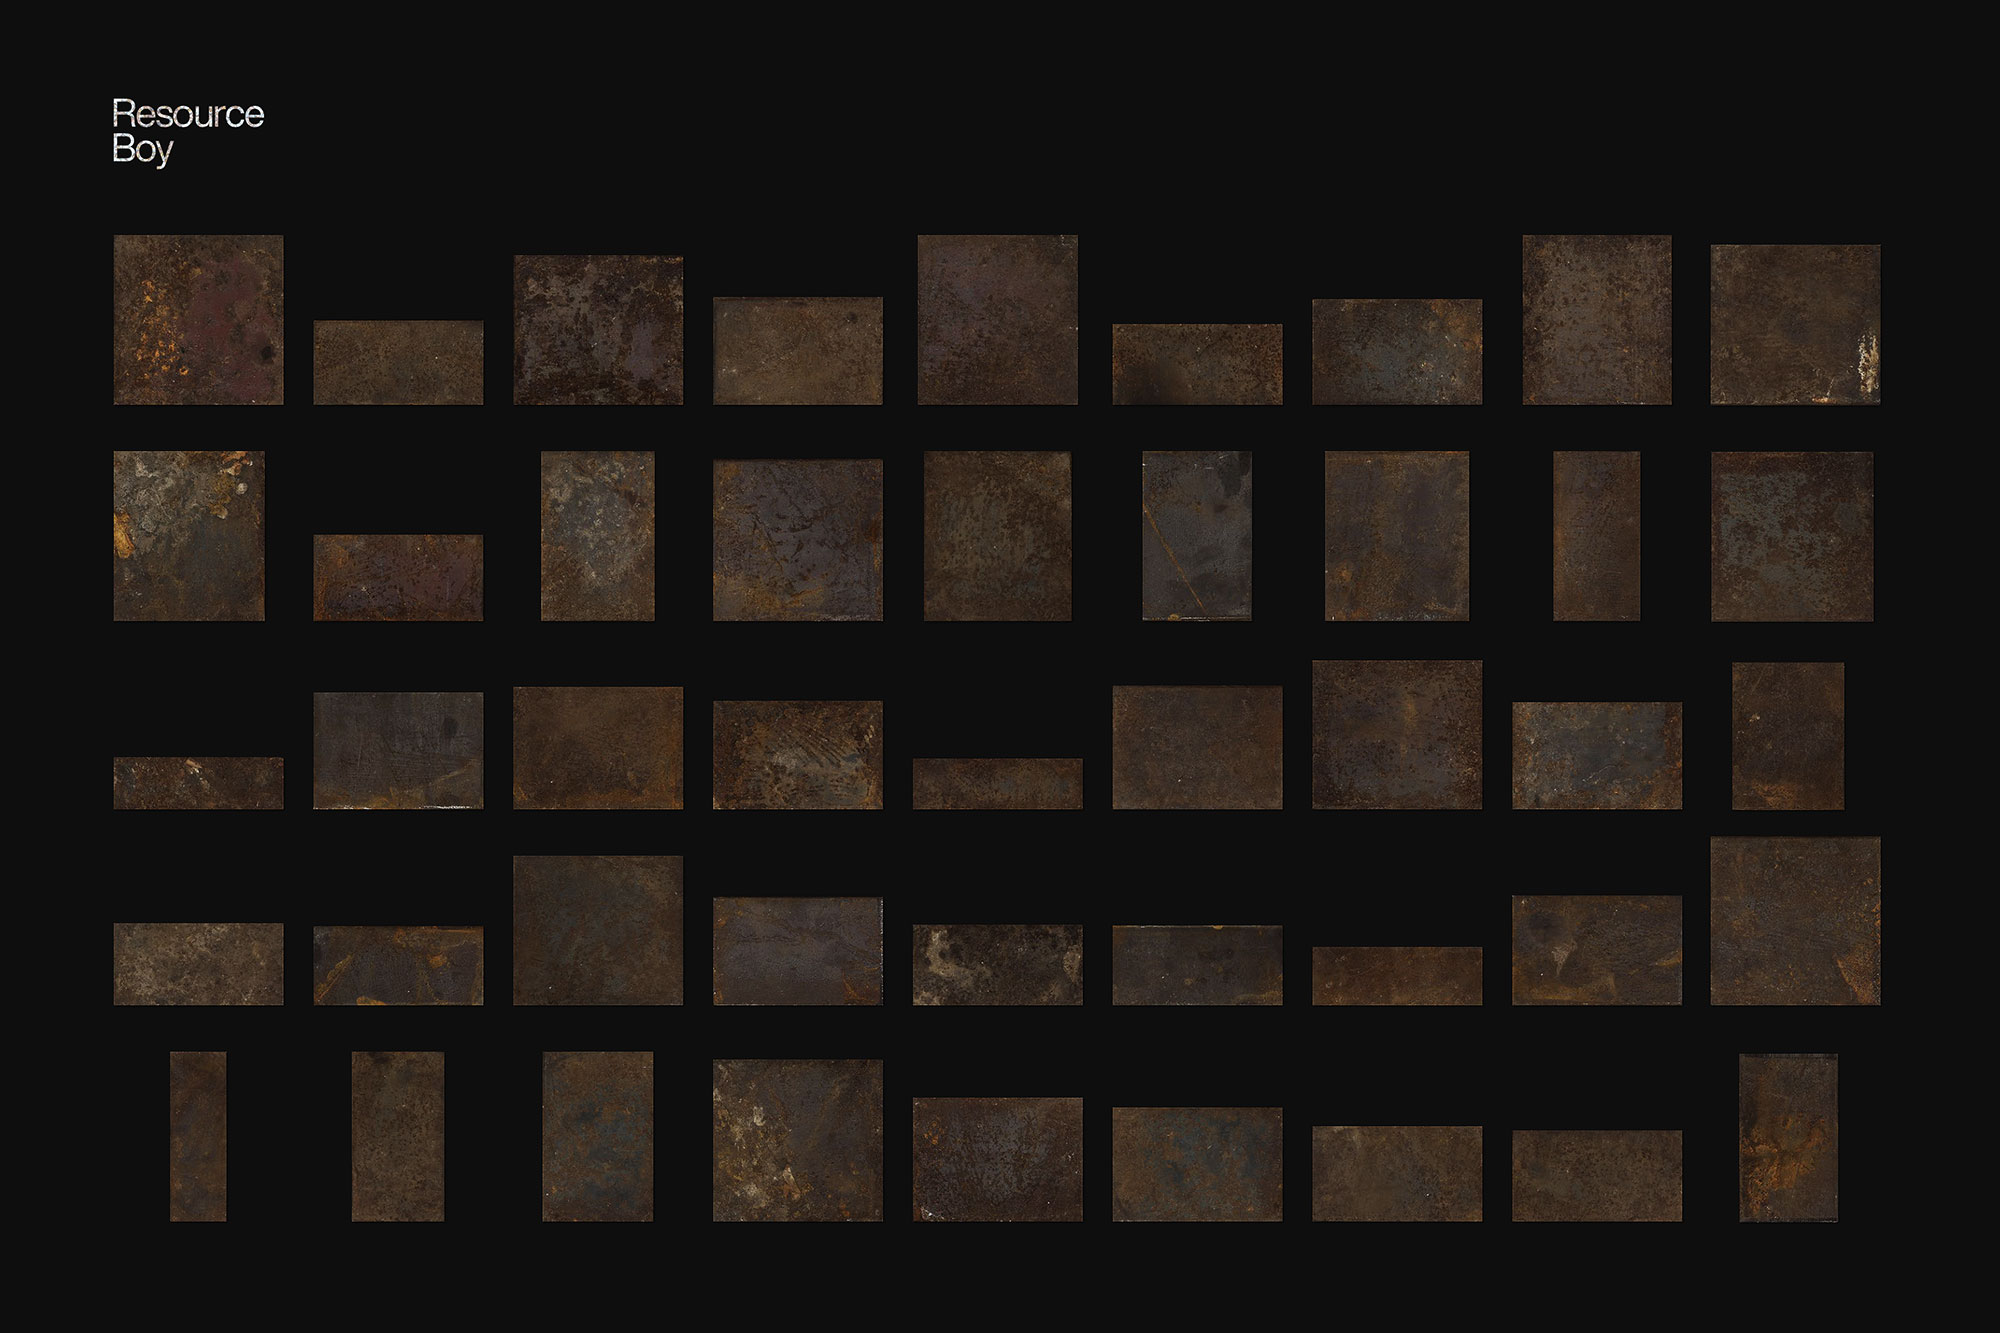 Free Rust Metal Textures (High Resolution 4K / 8K)